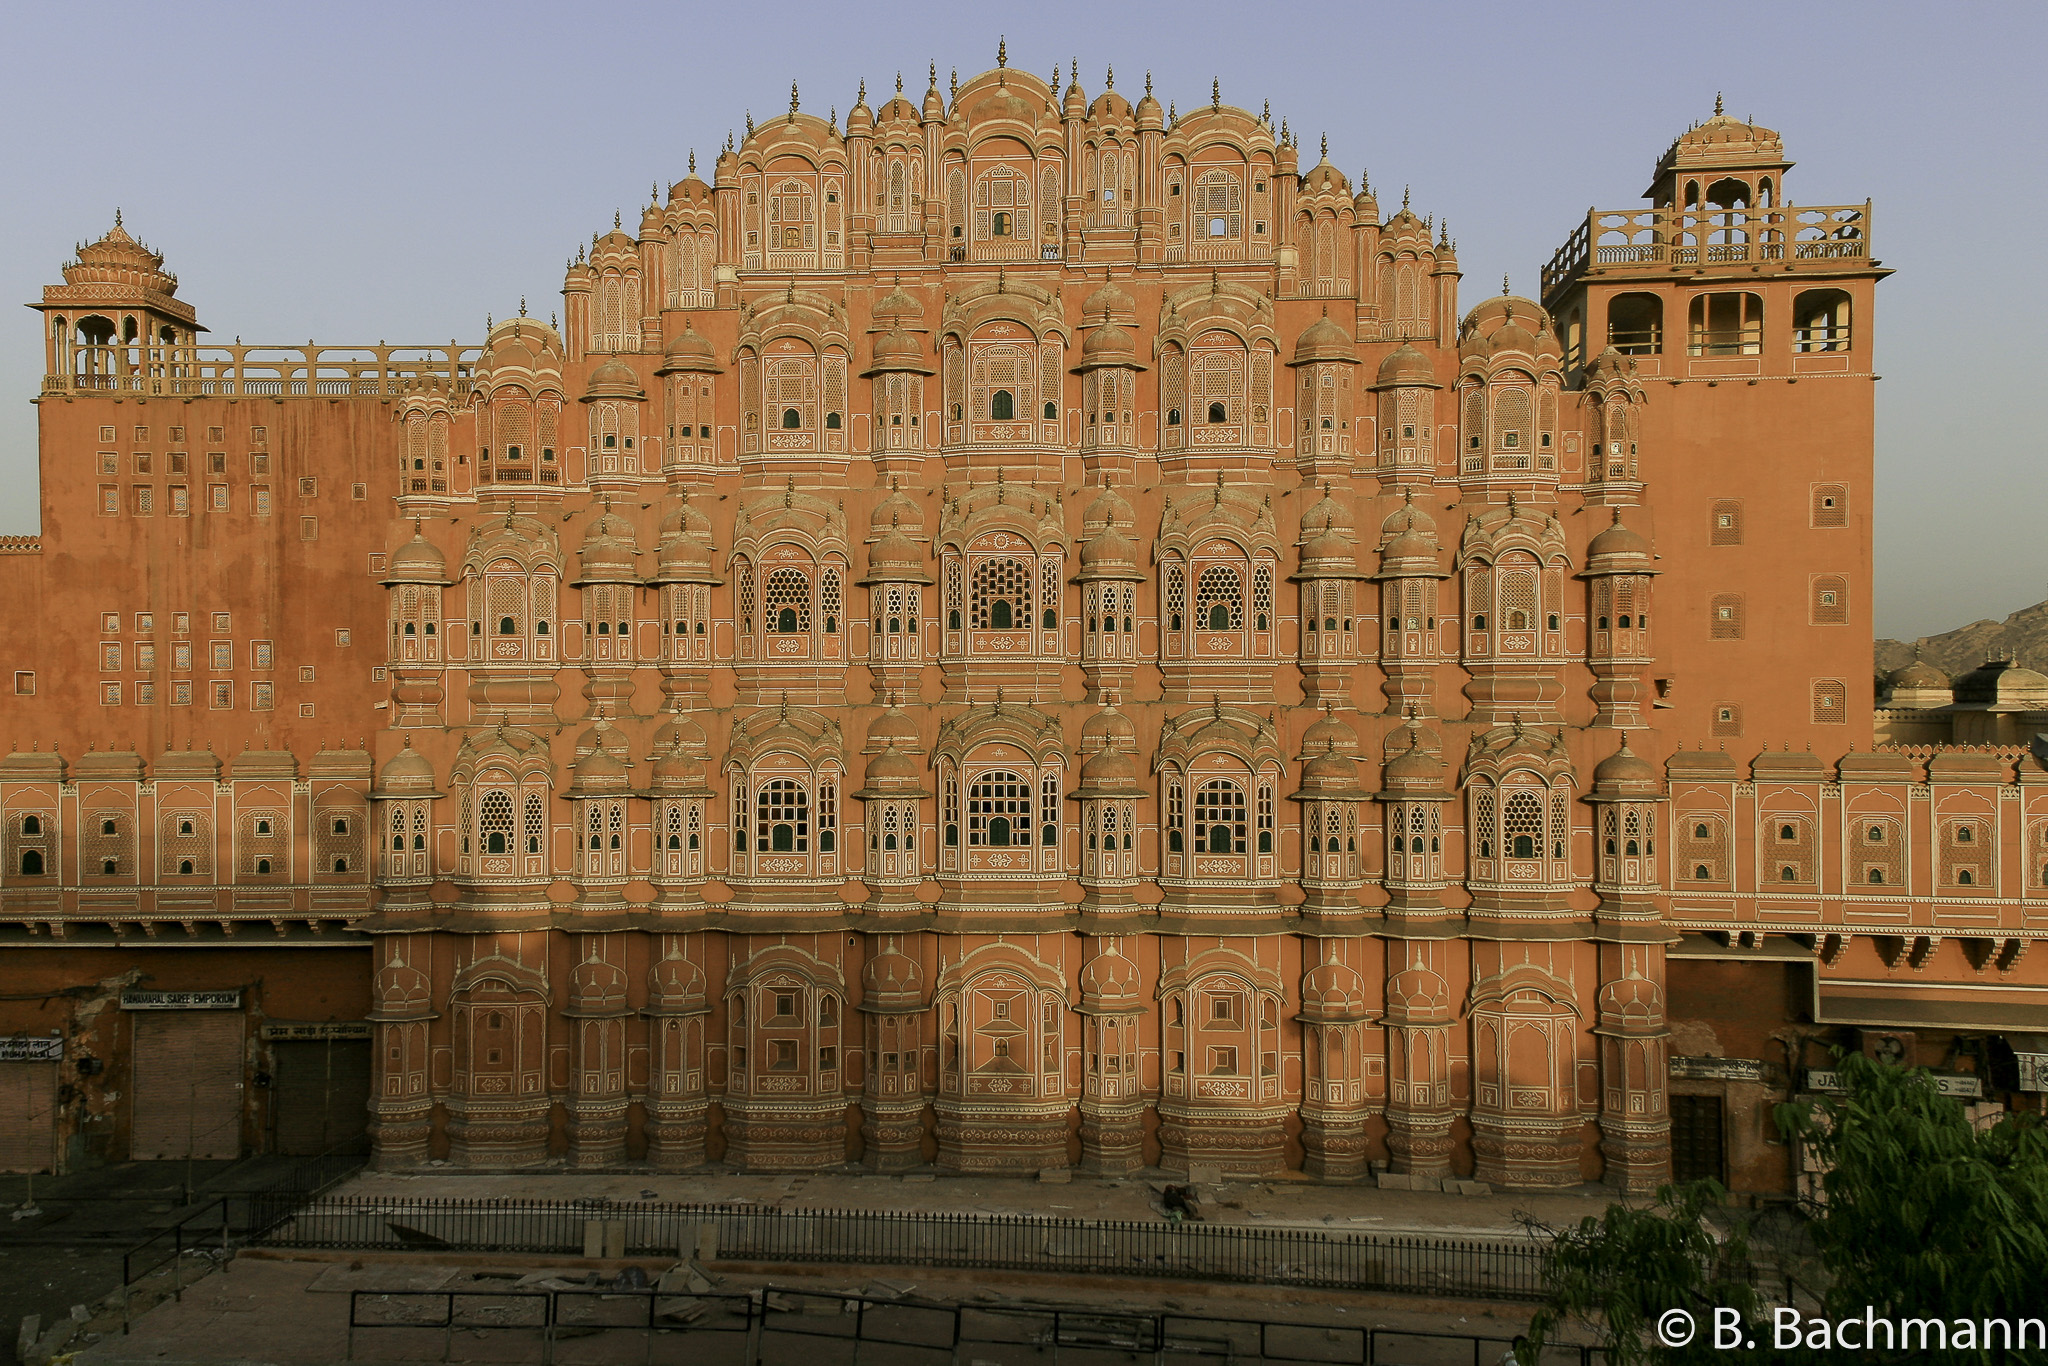 20100412_Jaipur_Fort-Amber_2408-Edit.jpg